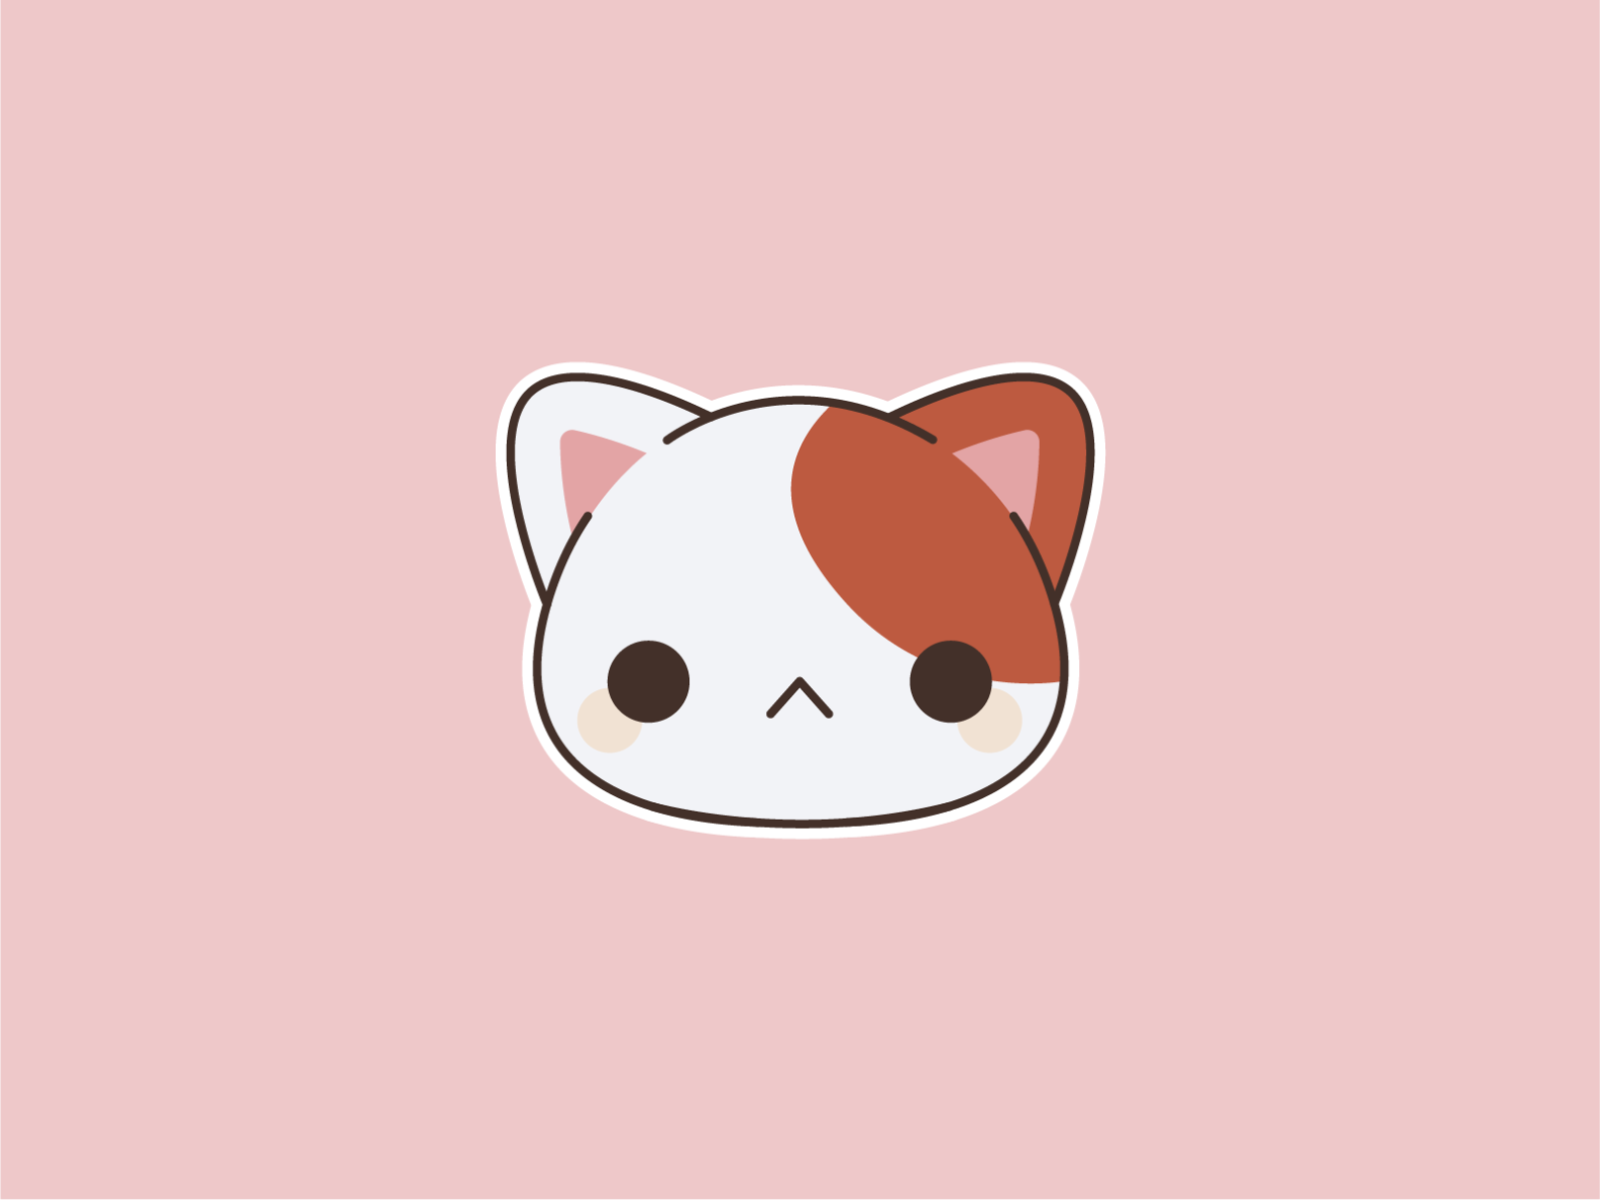 Anime Cat Love Cute Kawaii Happy Manga Chibi Japan  Anime Kawaii Cat PNG  Image  Transparent PNG Free Download on SeekPNG